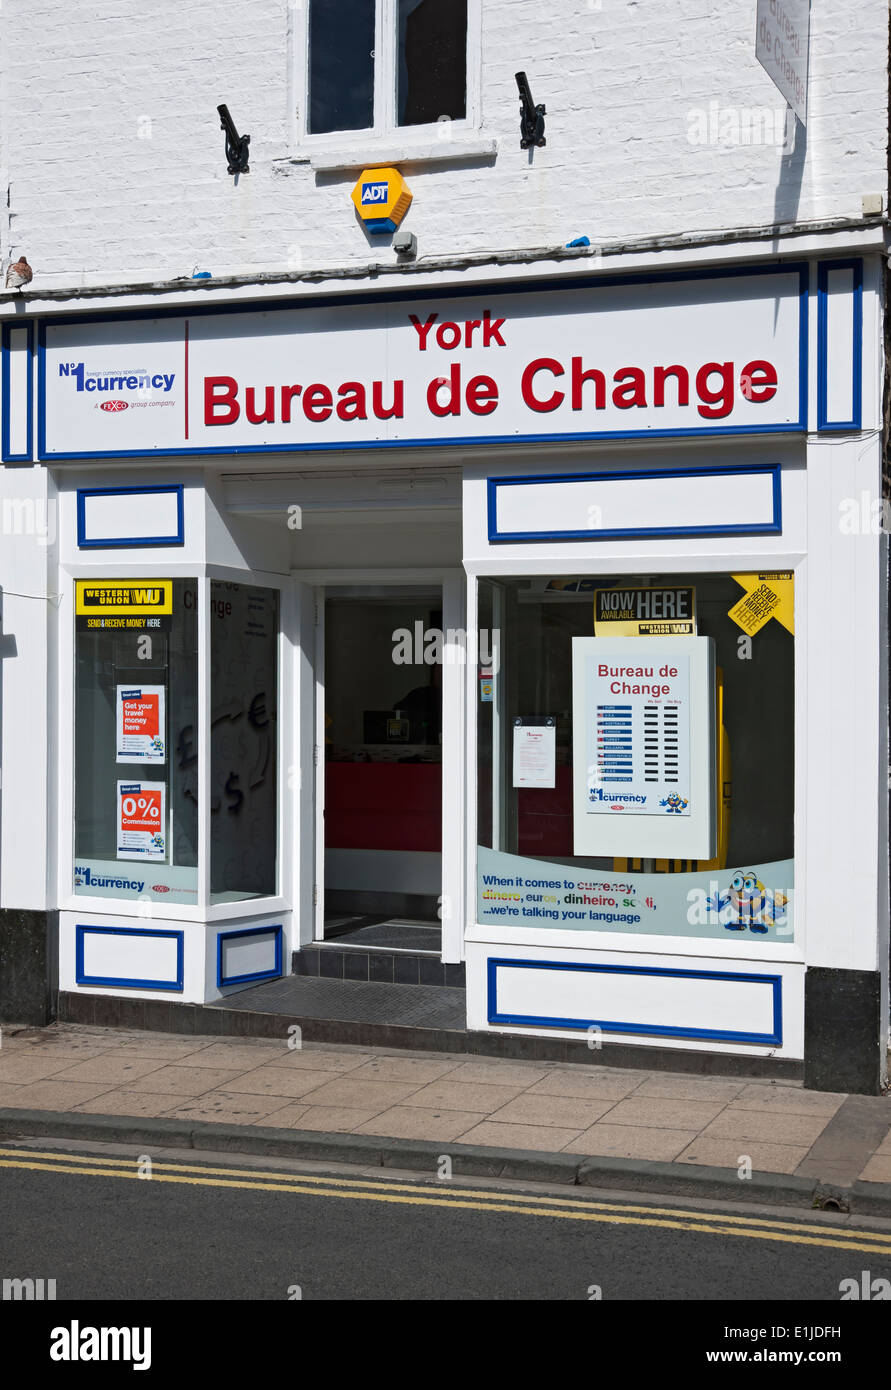 Bureau de change exterior York North Yorkshire England UK United Kingdom GB Great Britain Stock Photo